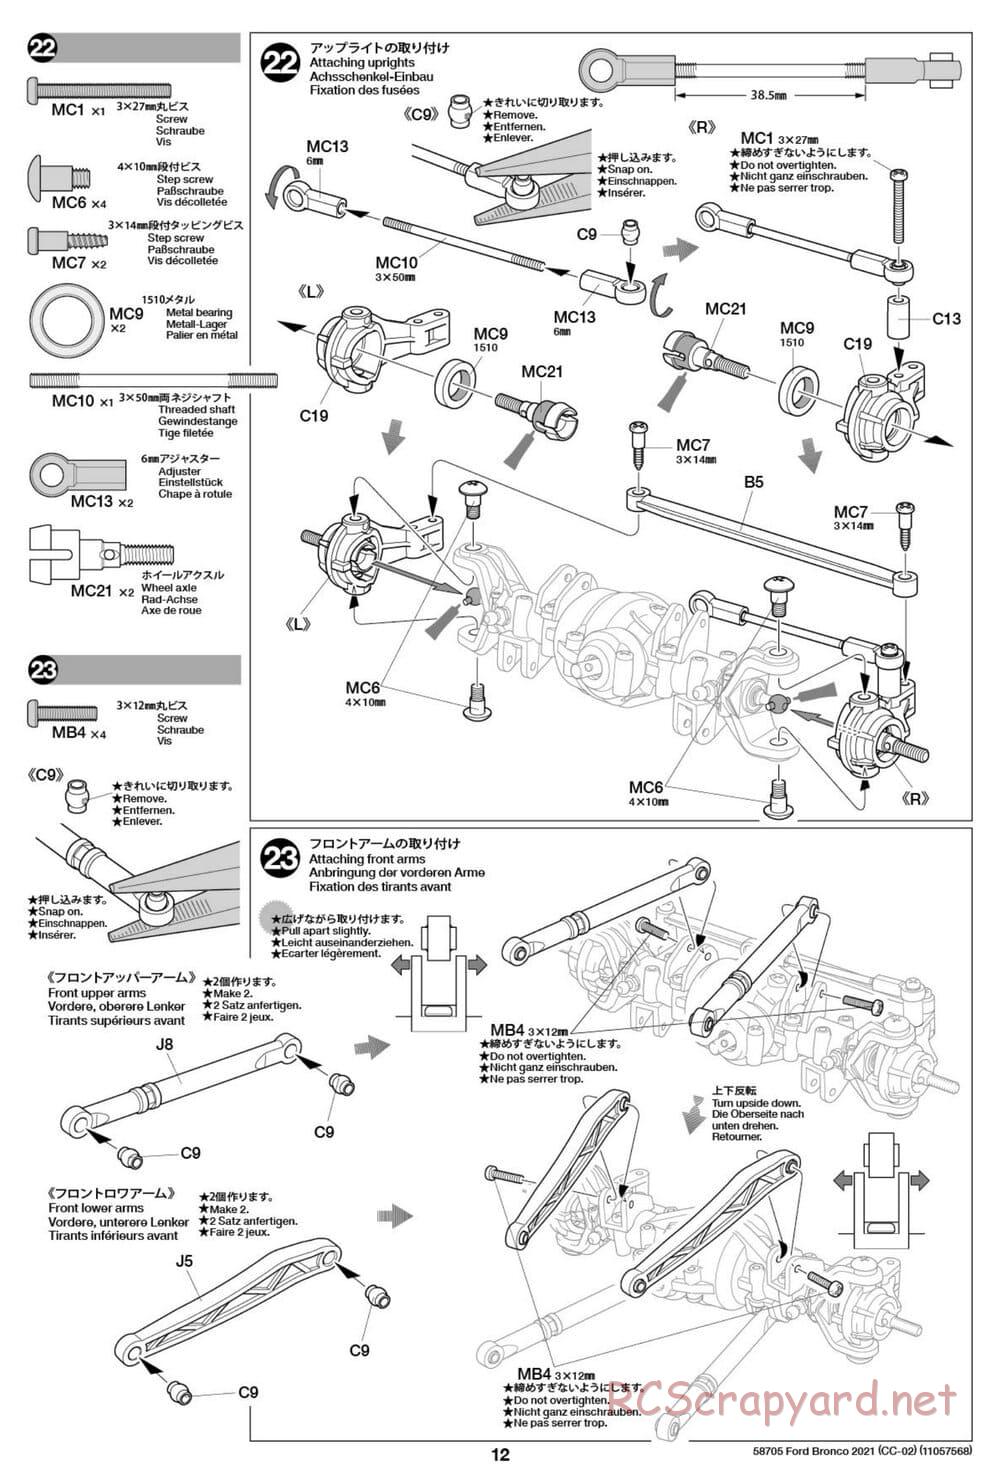 Tamiya - Ford Bronco 2021 - CC-02 Chassis - Manual - Page 12